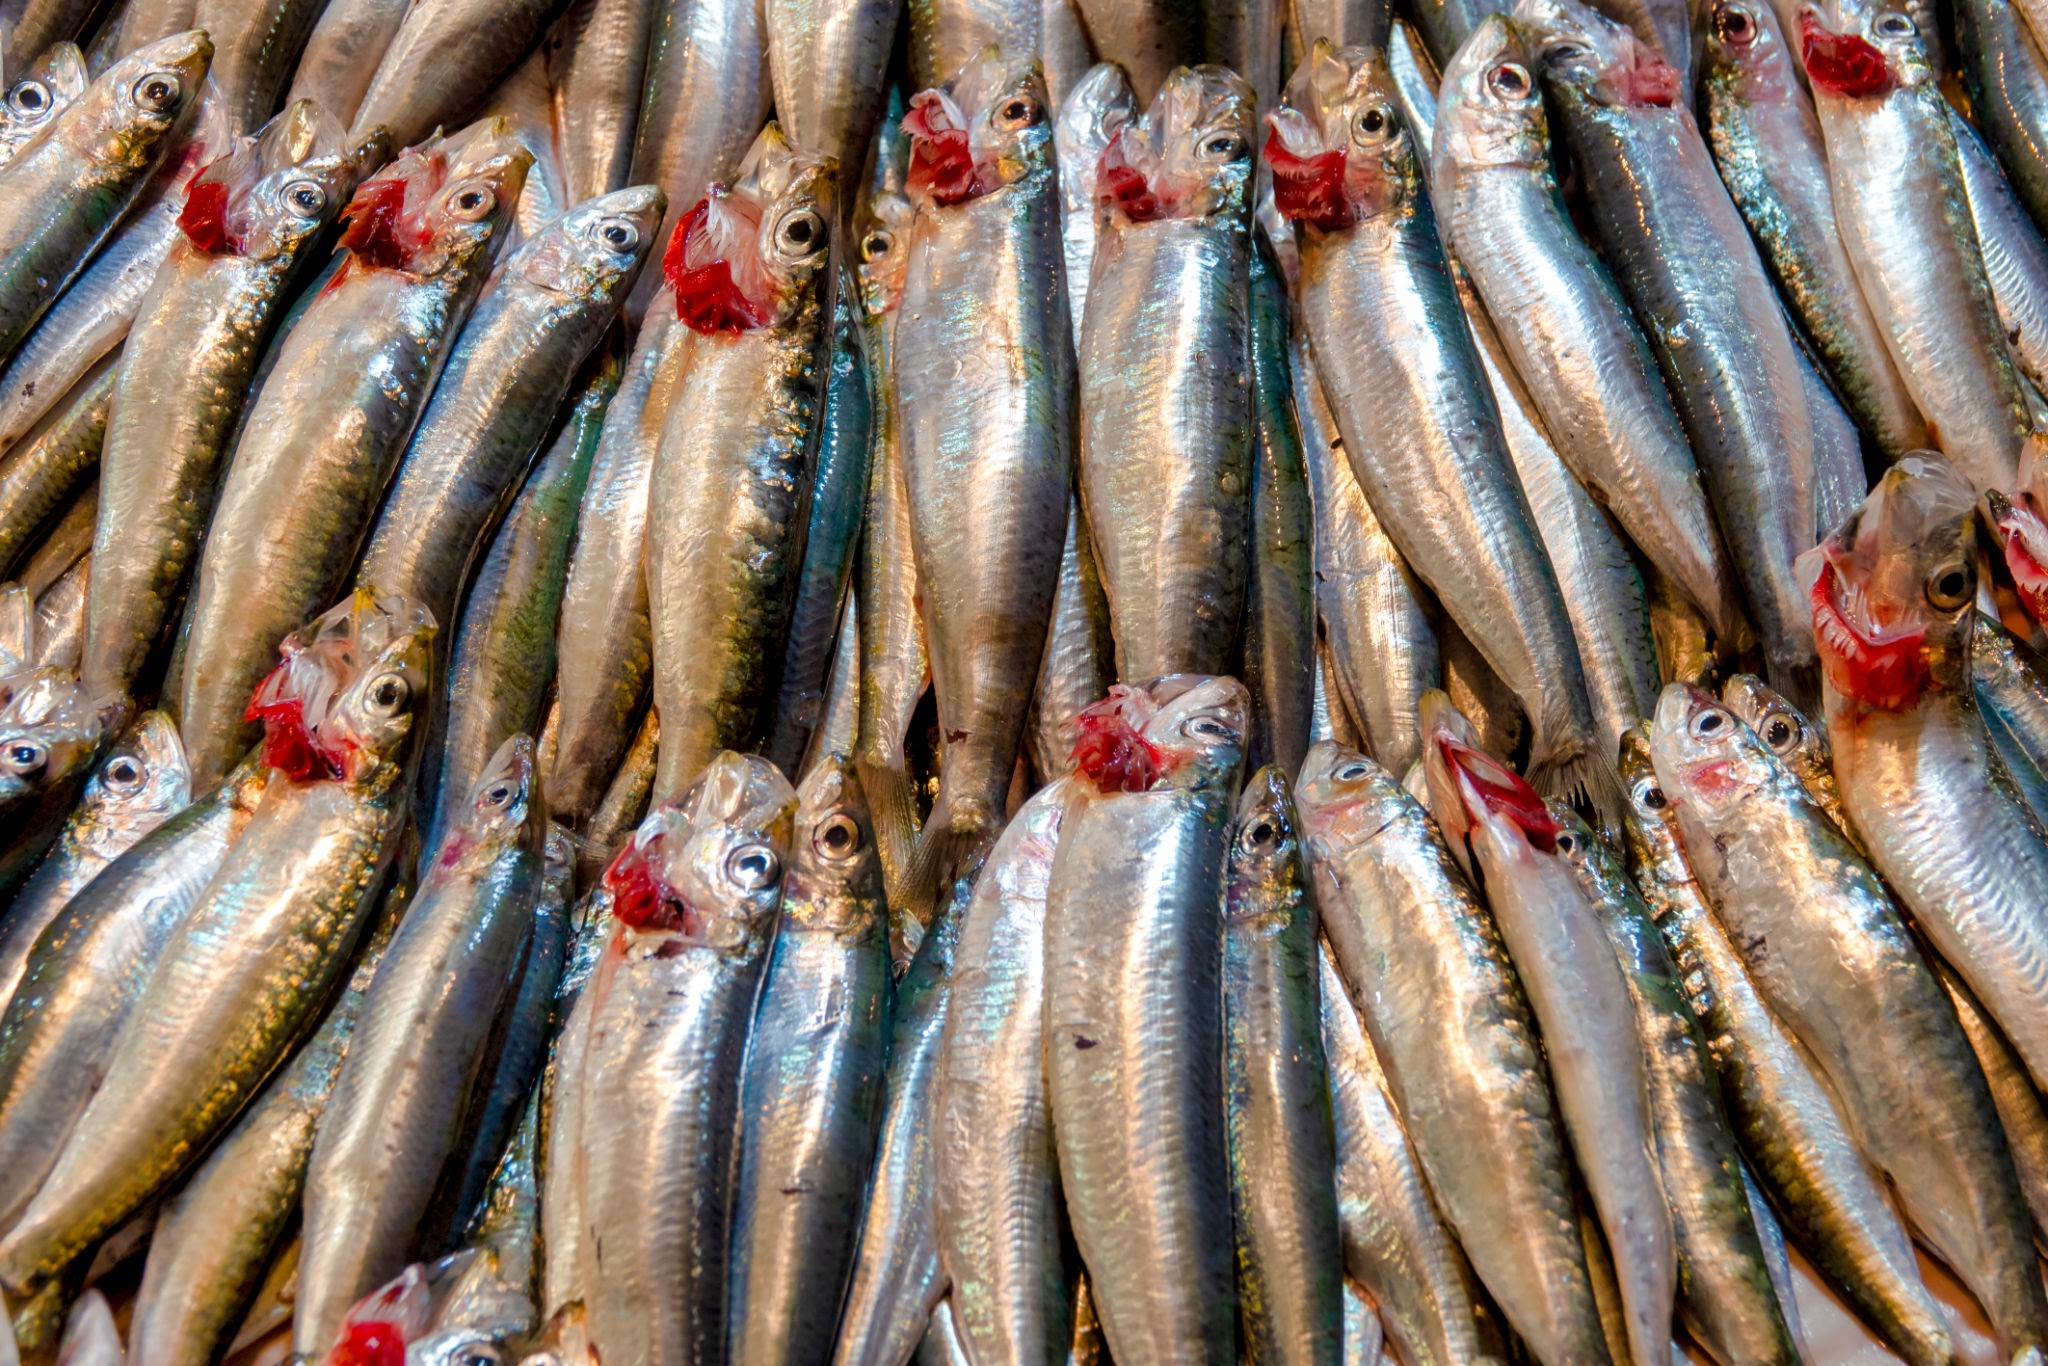 European pilchard on display in the Fish market in the Kemeralt? bazaar, Izmir, Turkey